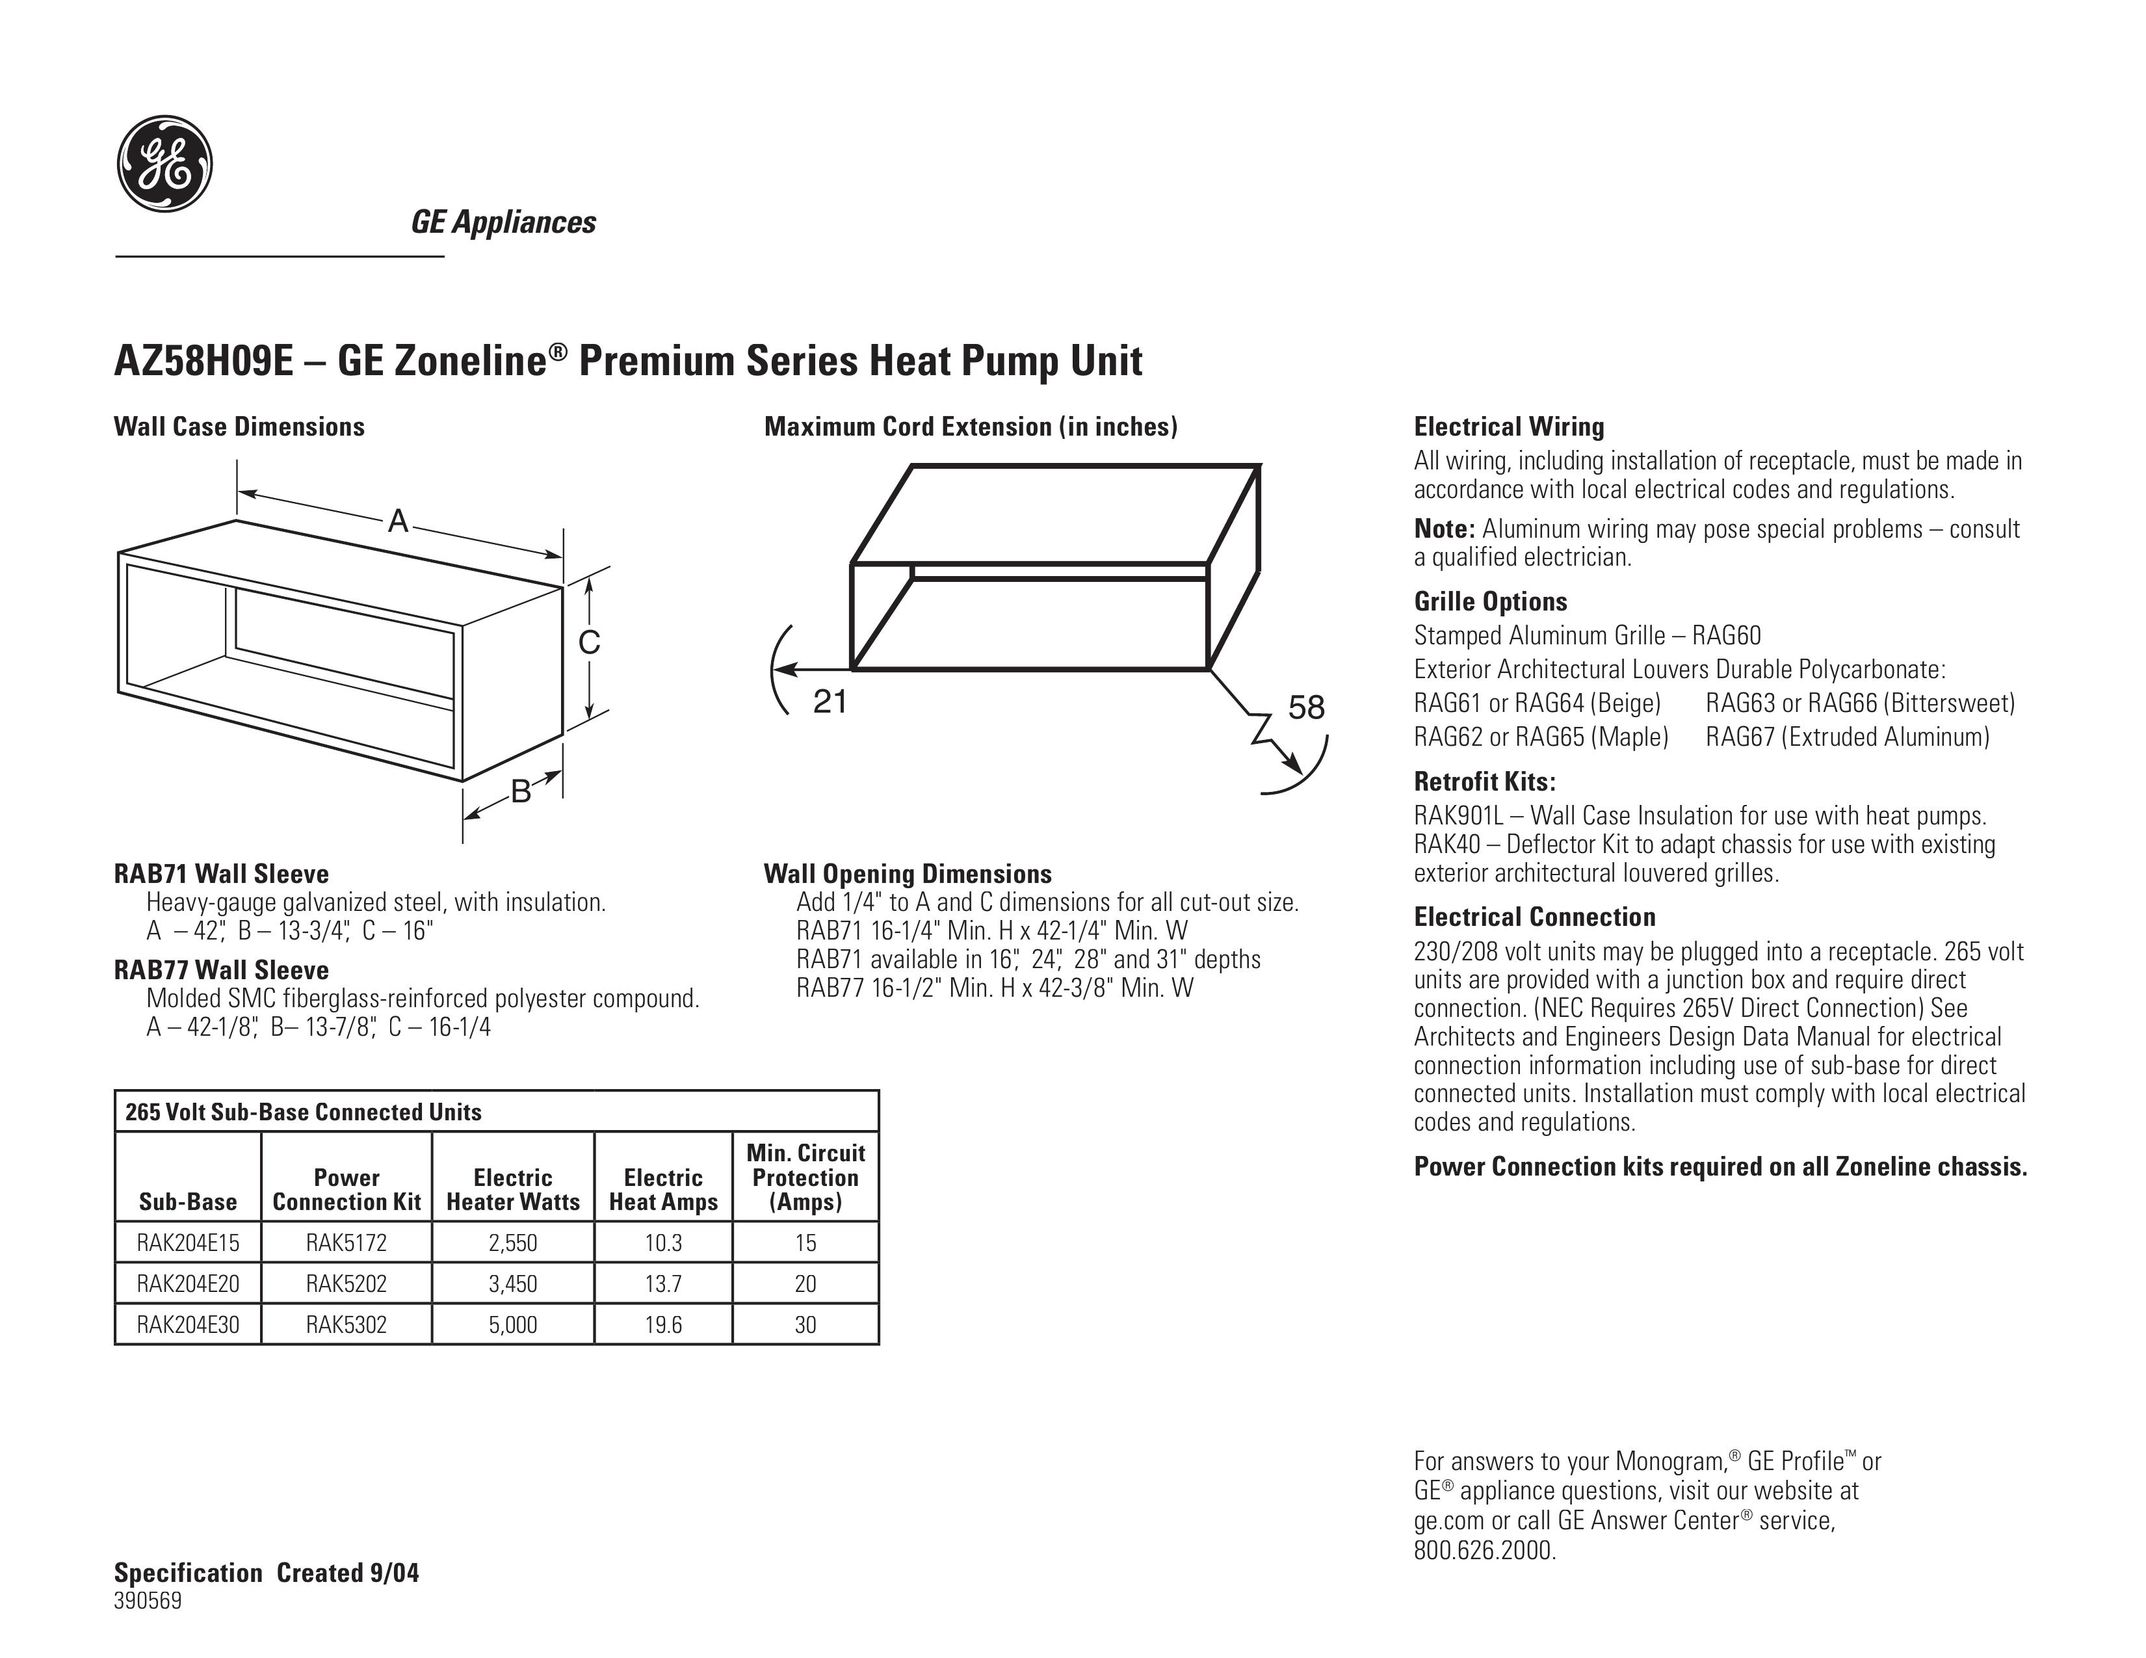 GE AZ58H09E Heat Pump User Manual